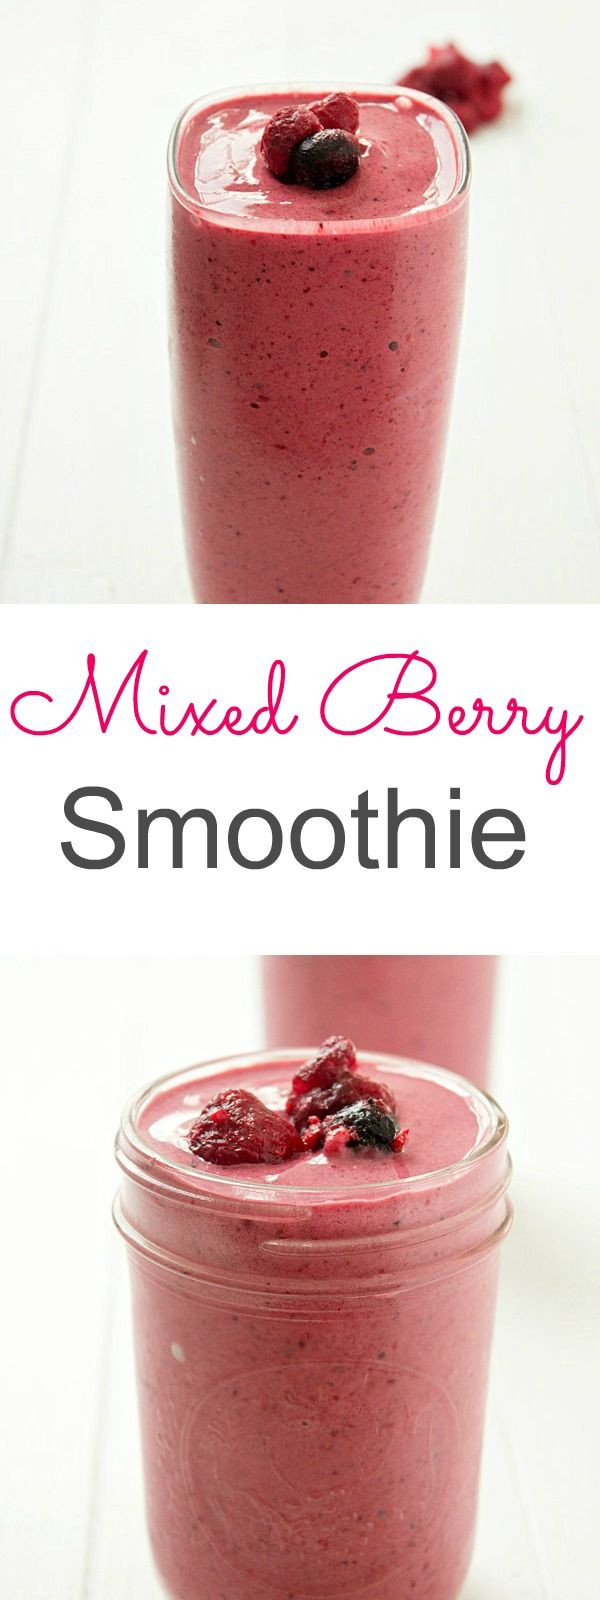 Yogurt Fruit Smoothies Recipes
 Mixed Berry Smoothie Recipe